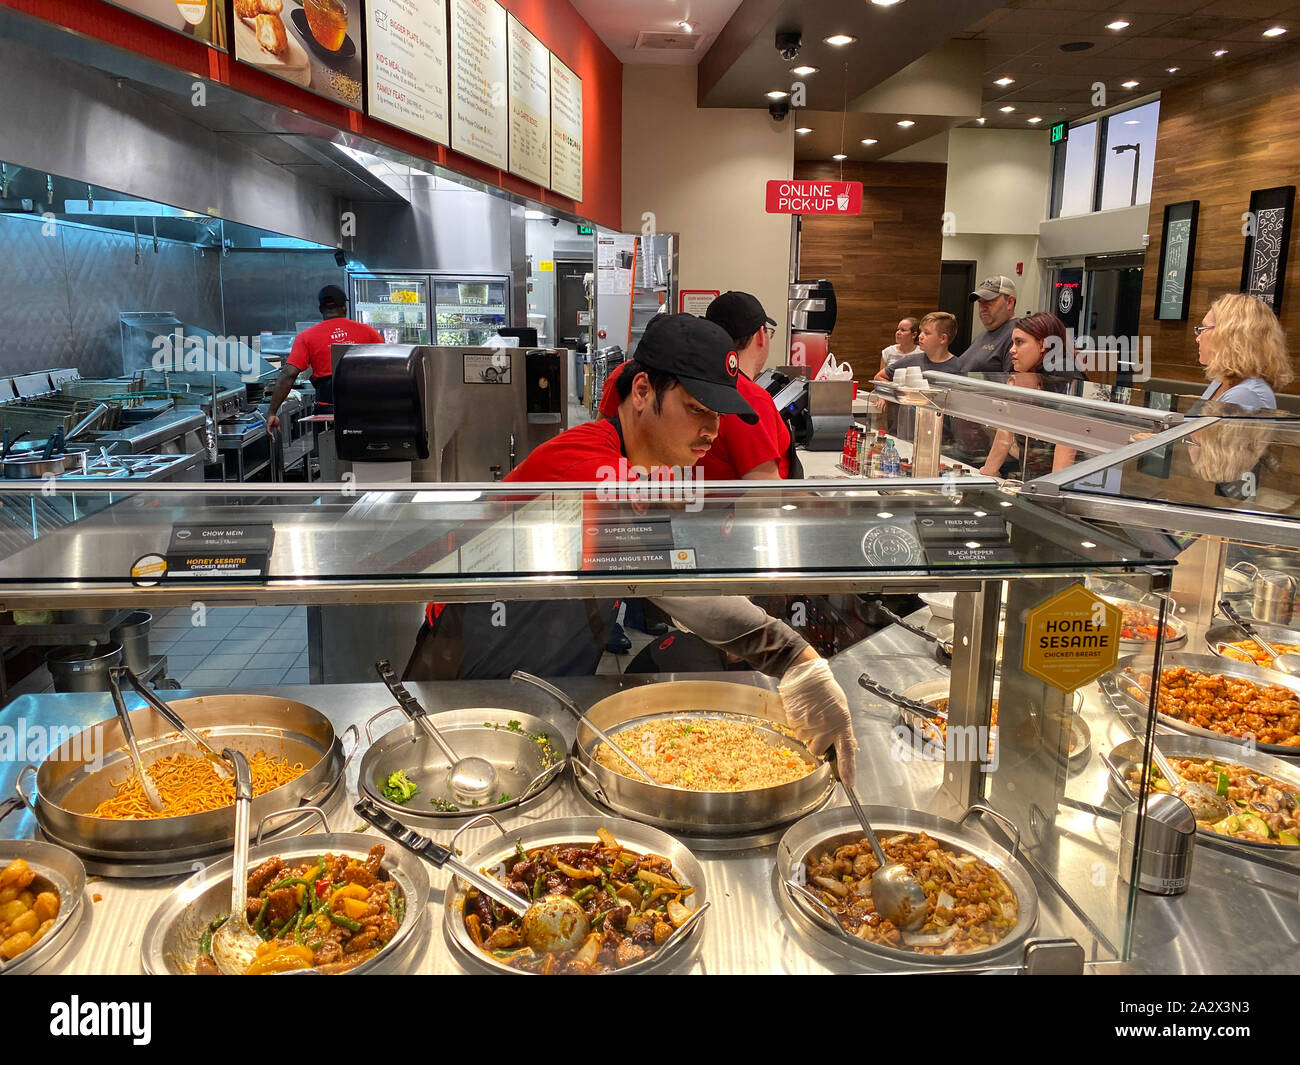 Orlando,FL/USA-10/2/19: Panda Express chinese fast food restaurant employees waiting on customers. Stock Photo